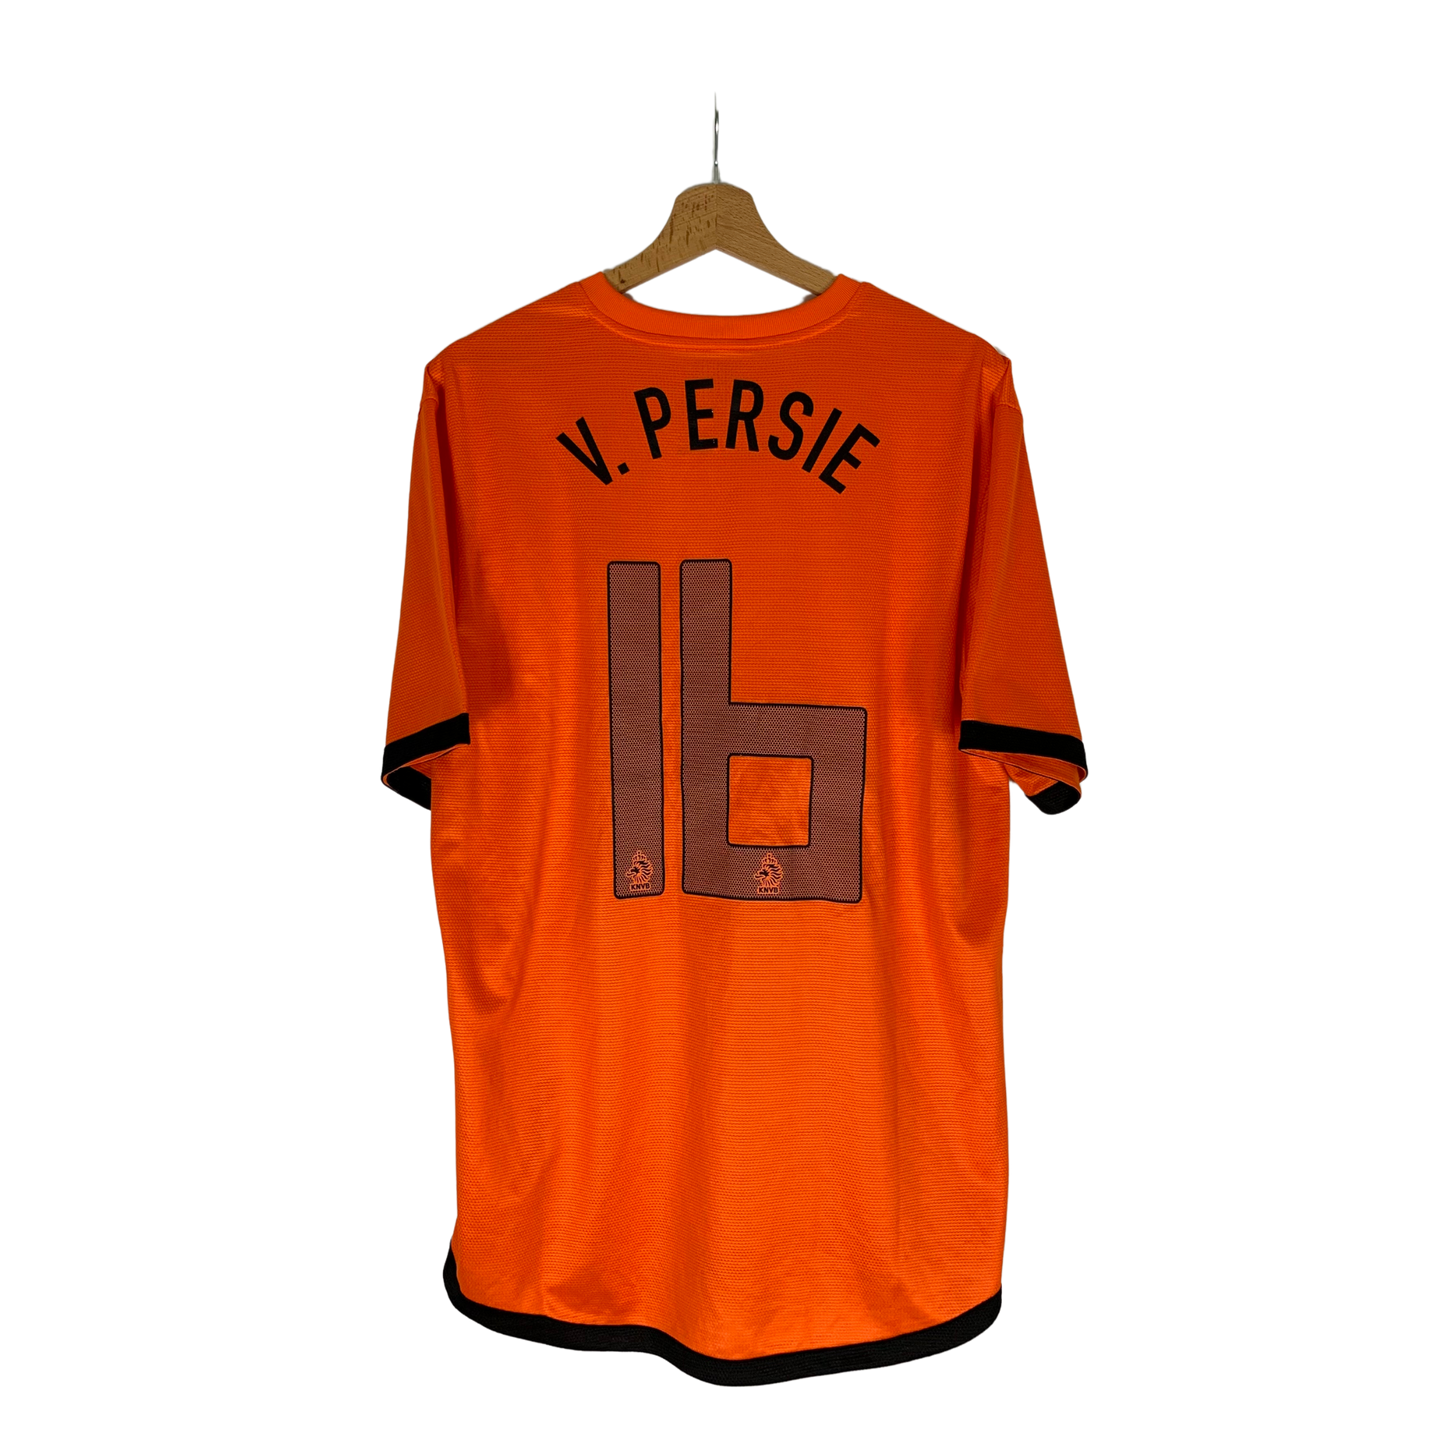 Classic Football Shirt The Netherlands season 2012 - Van Persie at InnoFoot 